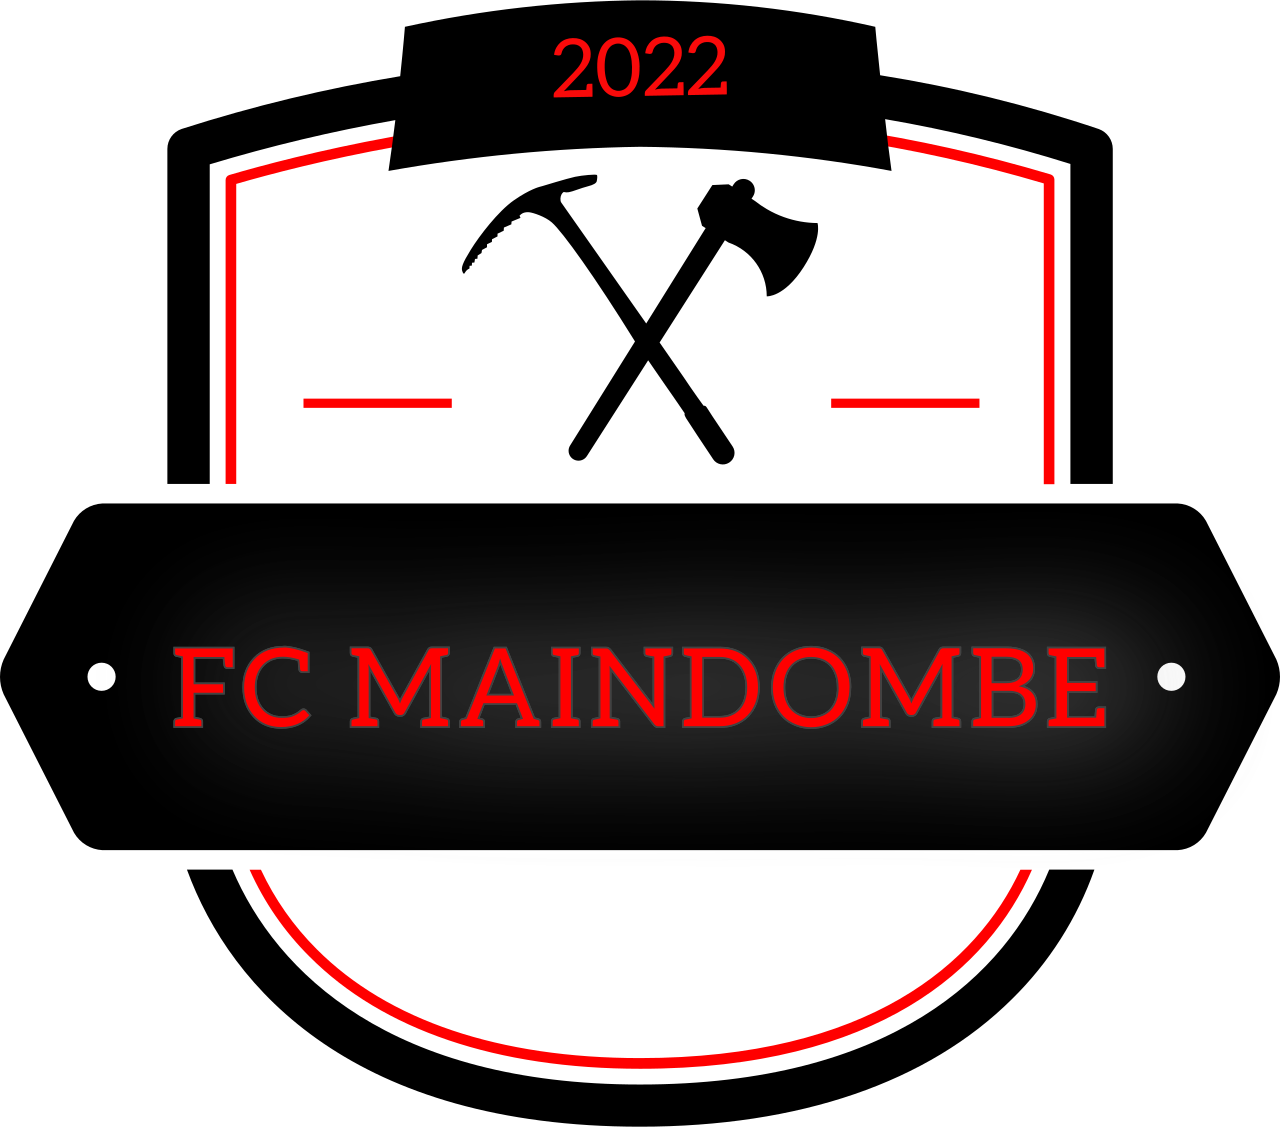 FC MAINDOMBE's web page